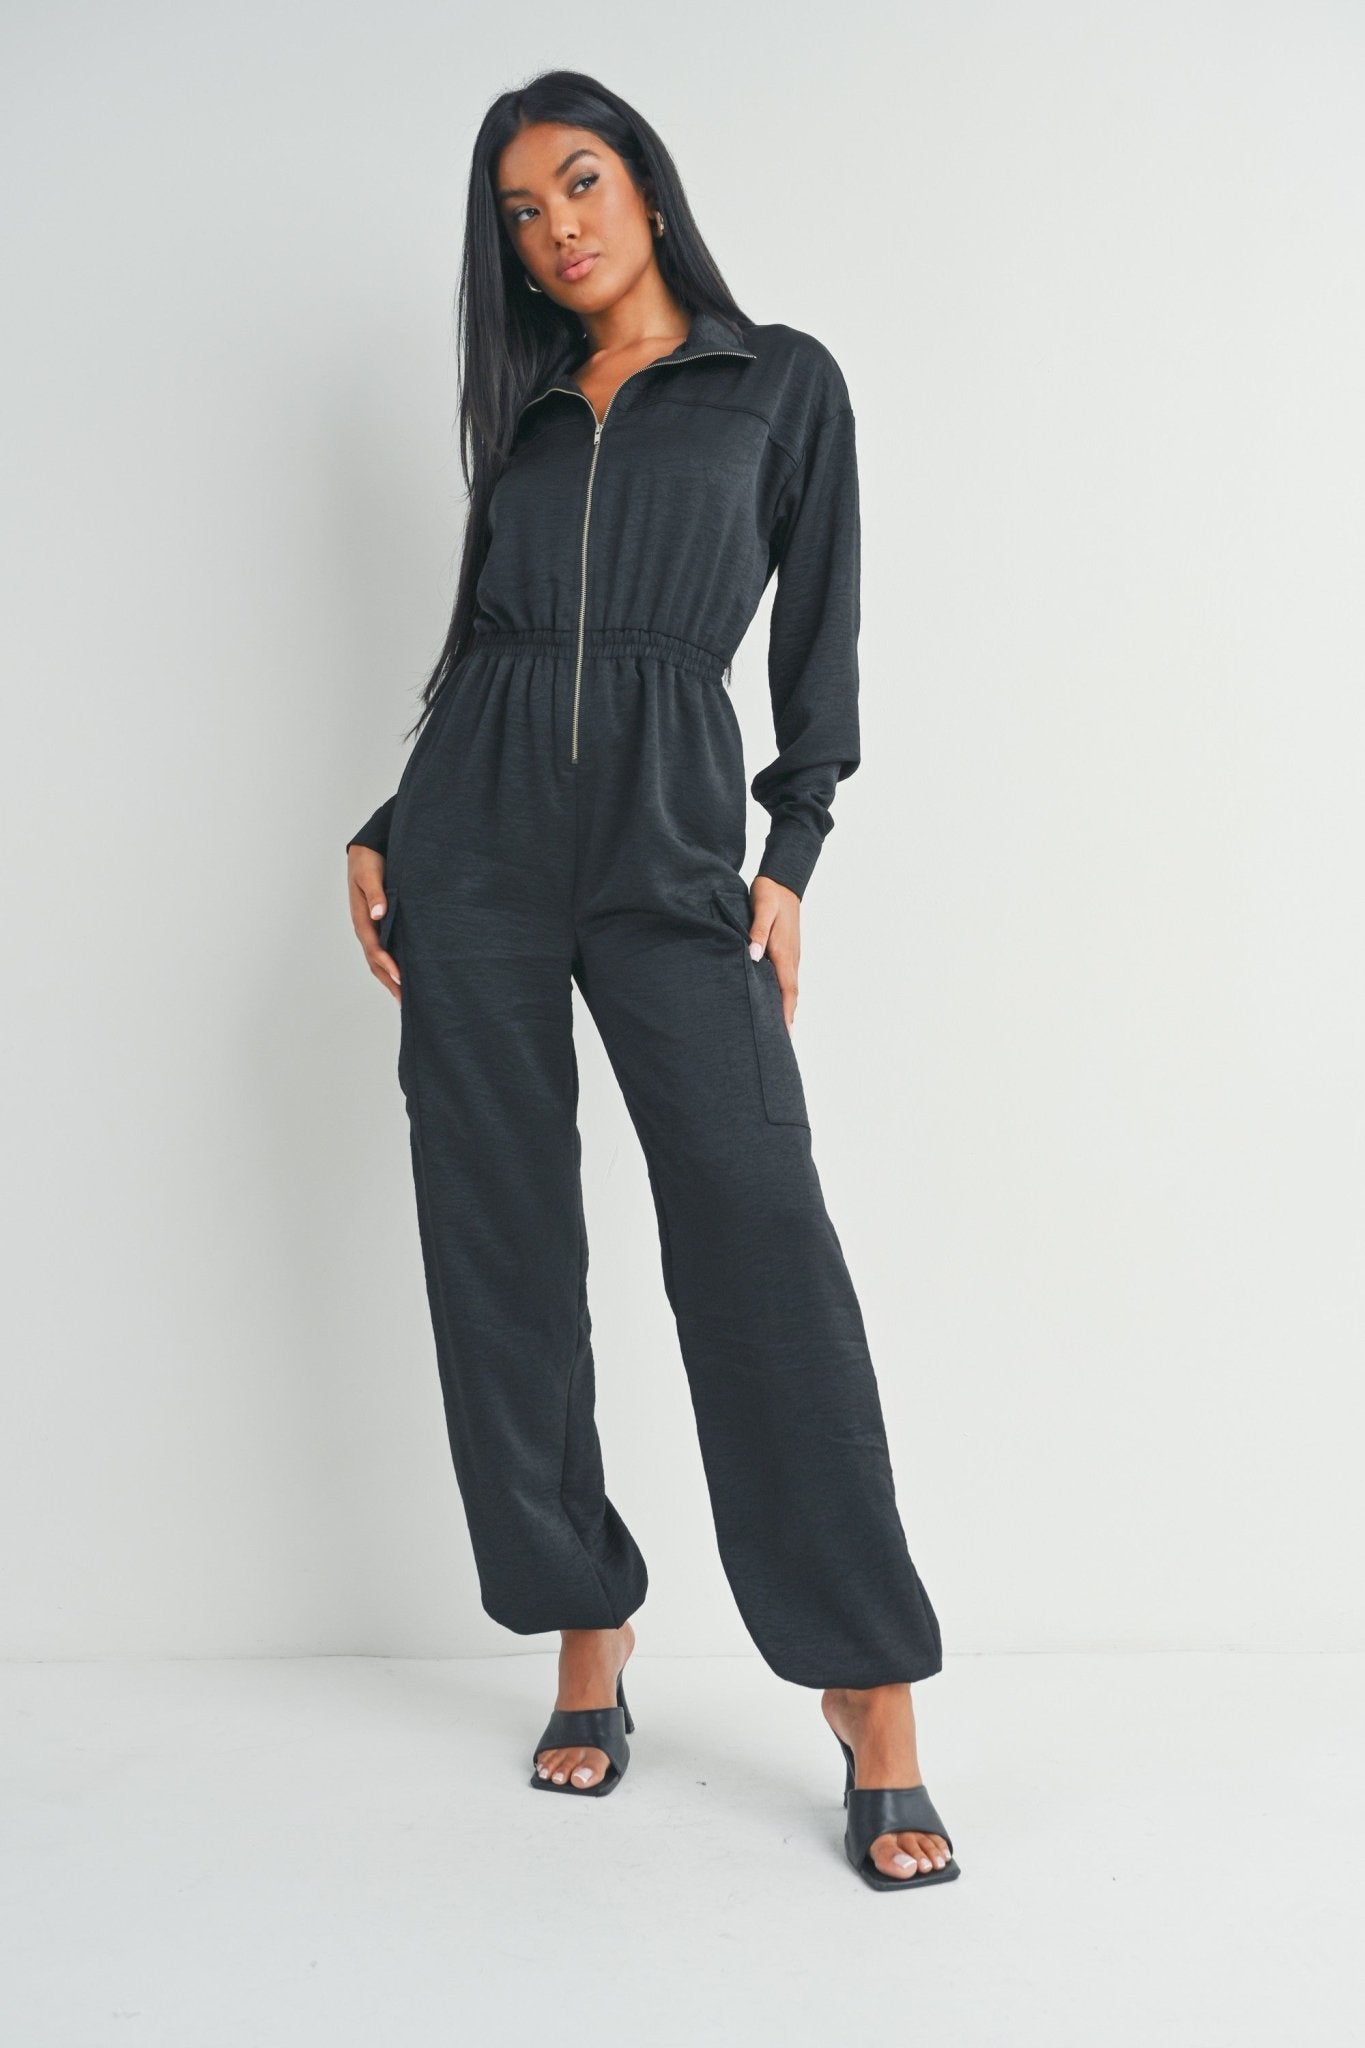 Long Sleeve Black Jumpsuit - Styled by Ashley Brooke